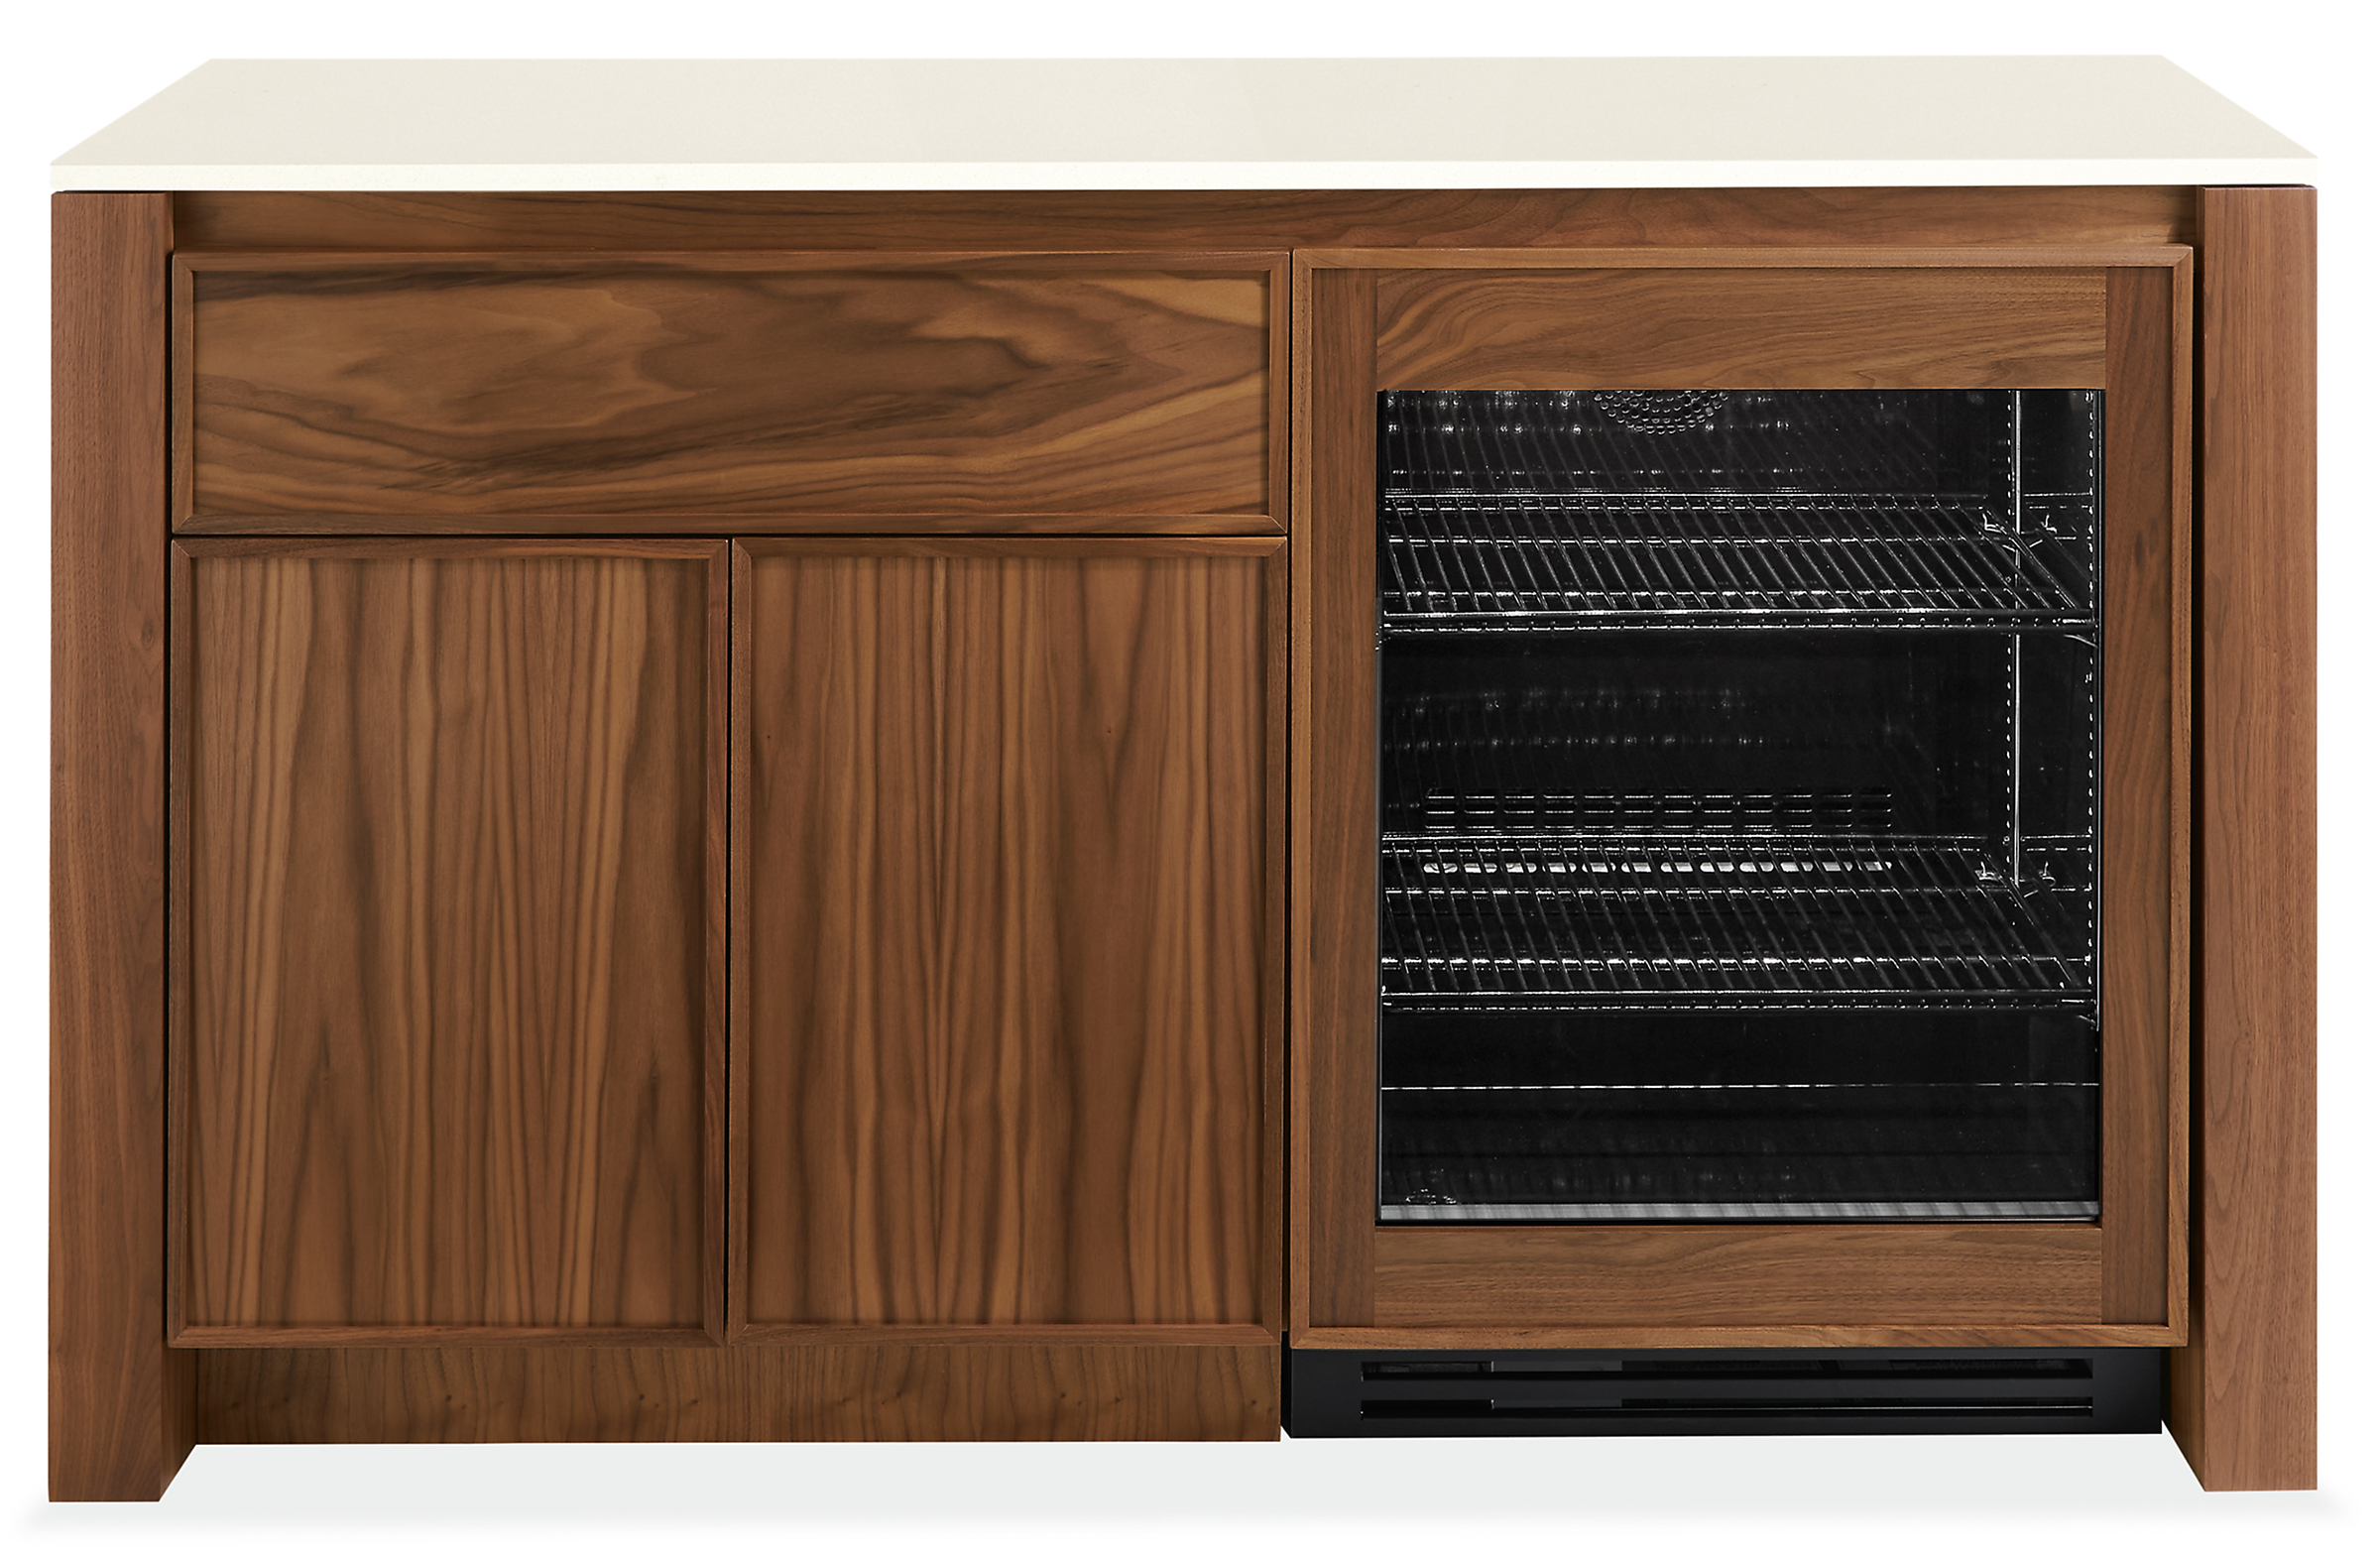 Amherst Storage Cabinets with Refrigerator